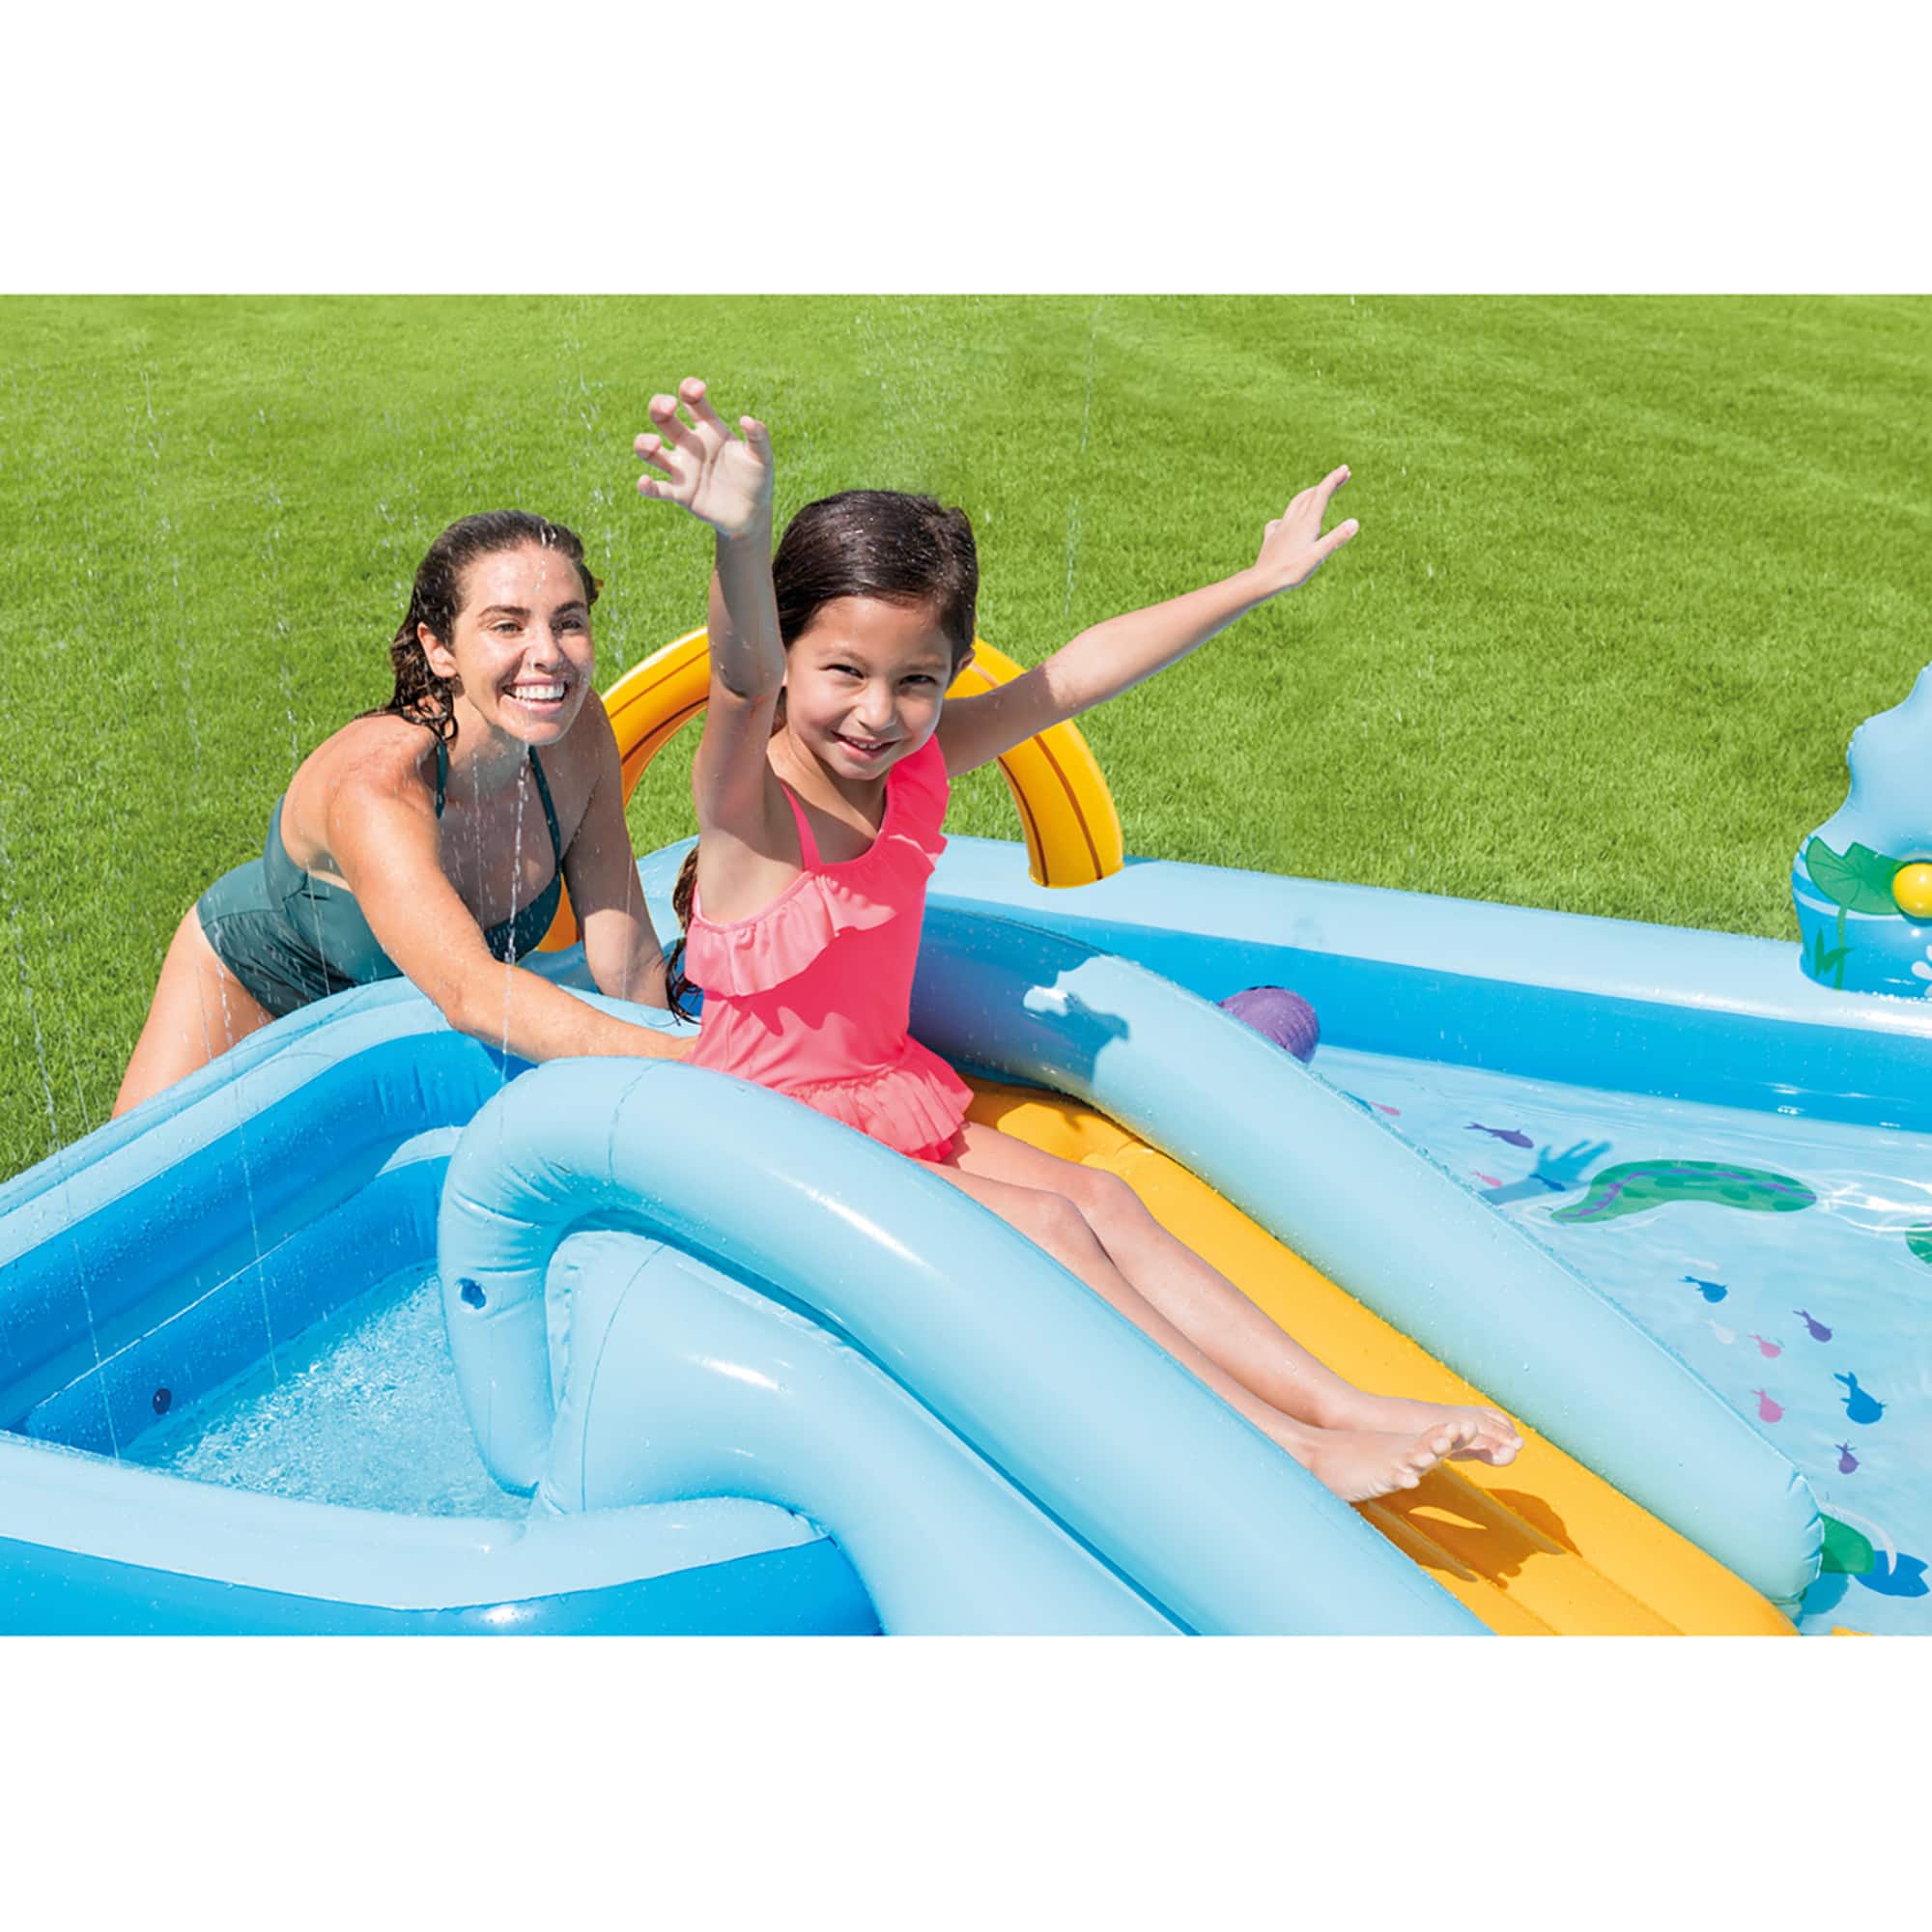 Intex Jungle Adventure Inflatable Pool Play Center